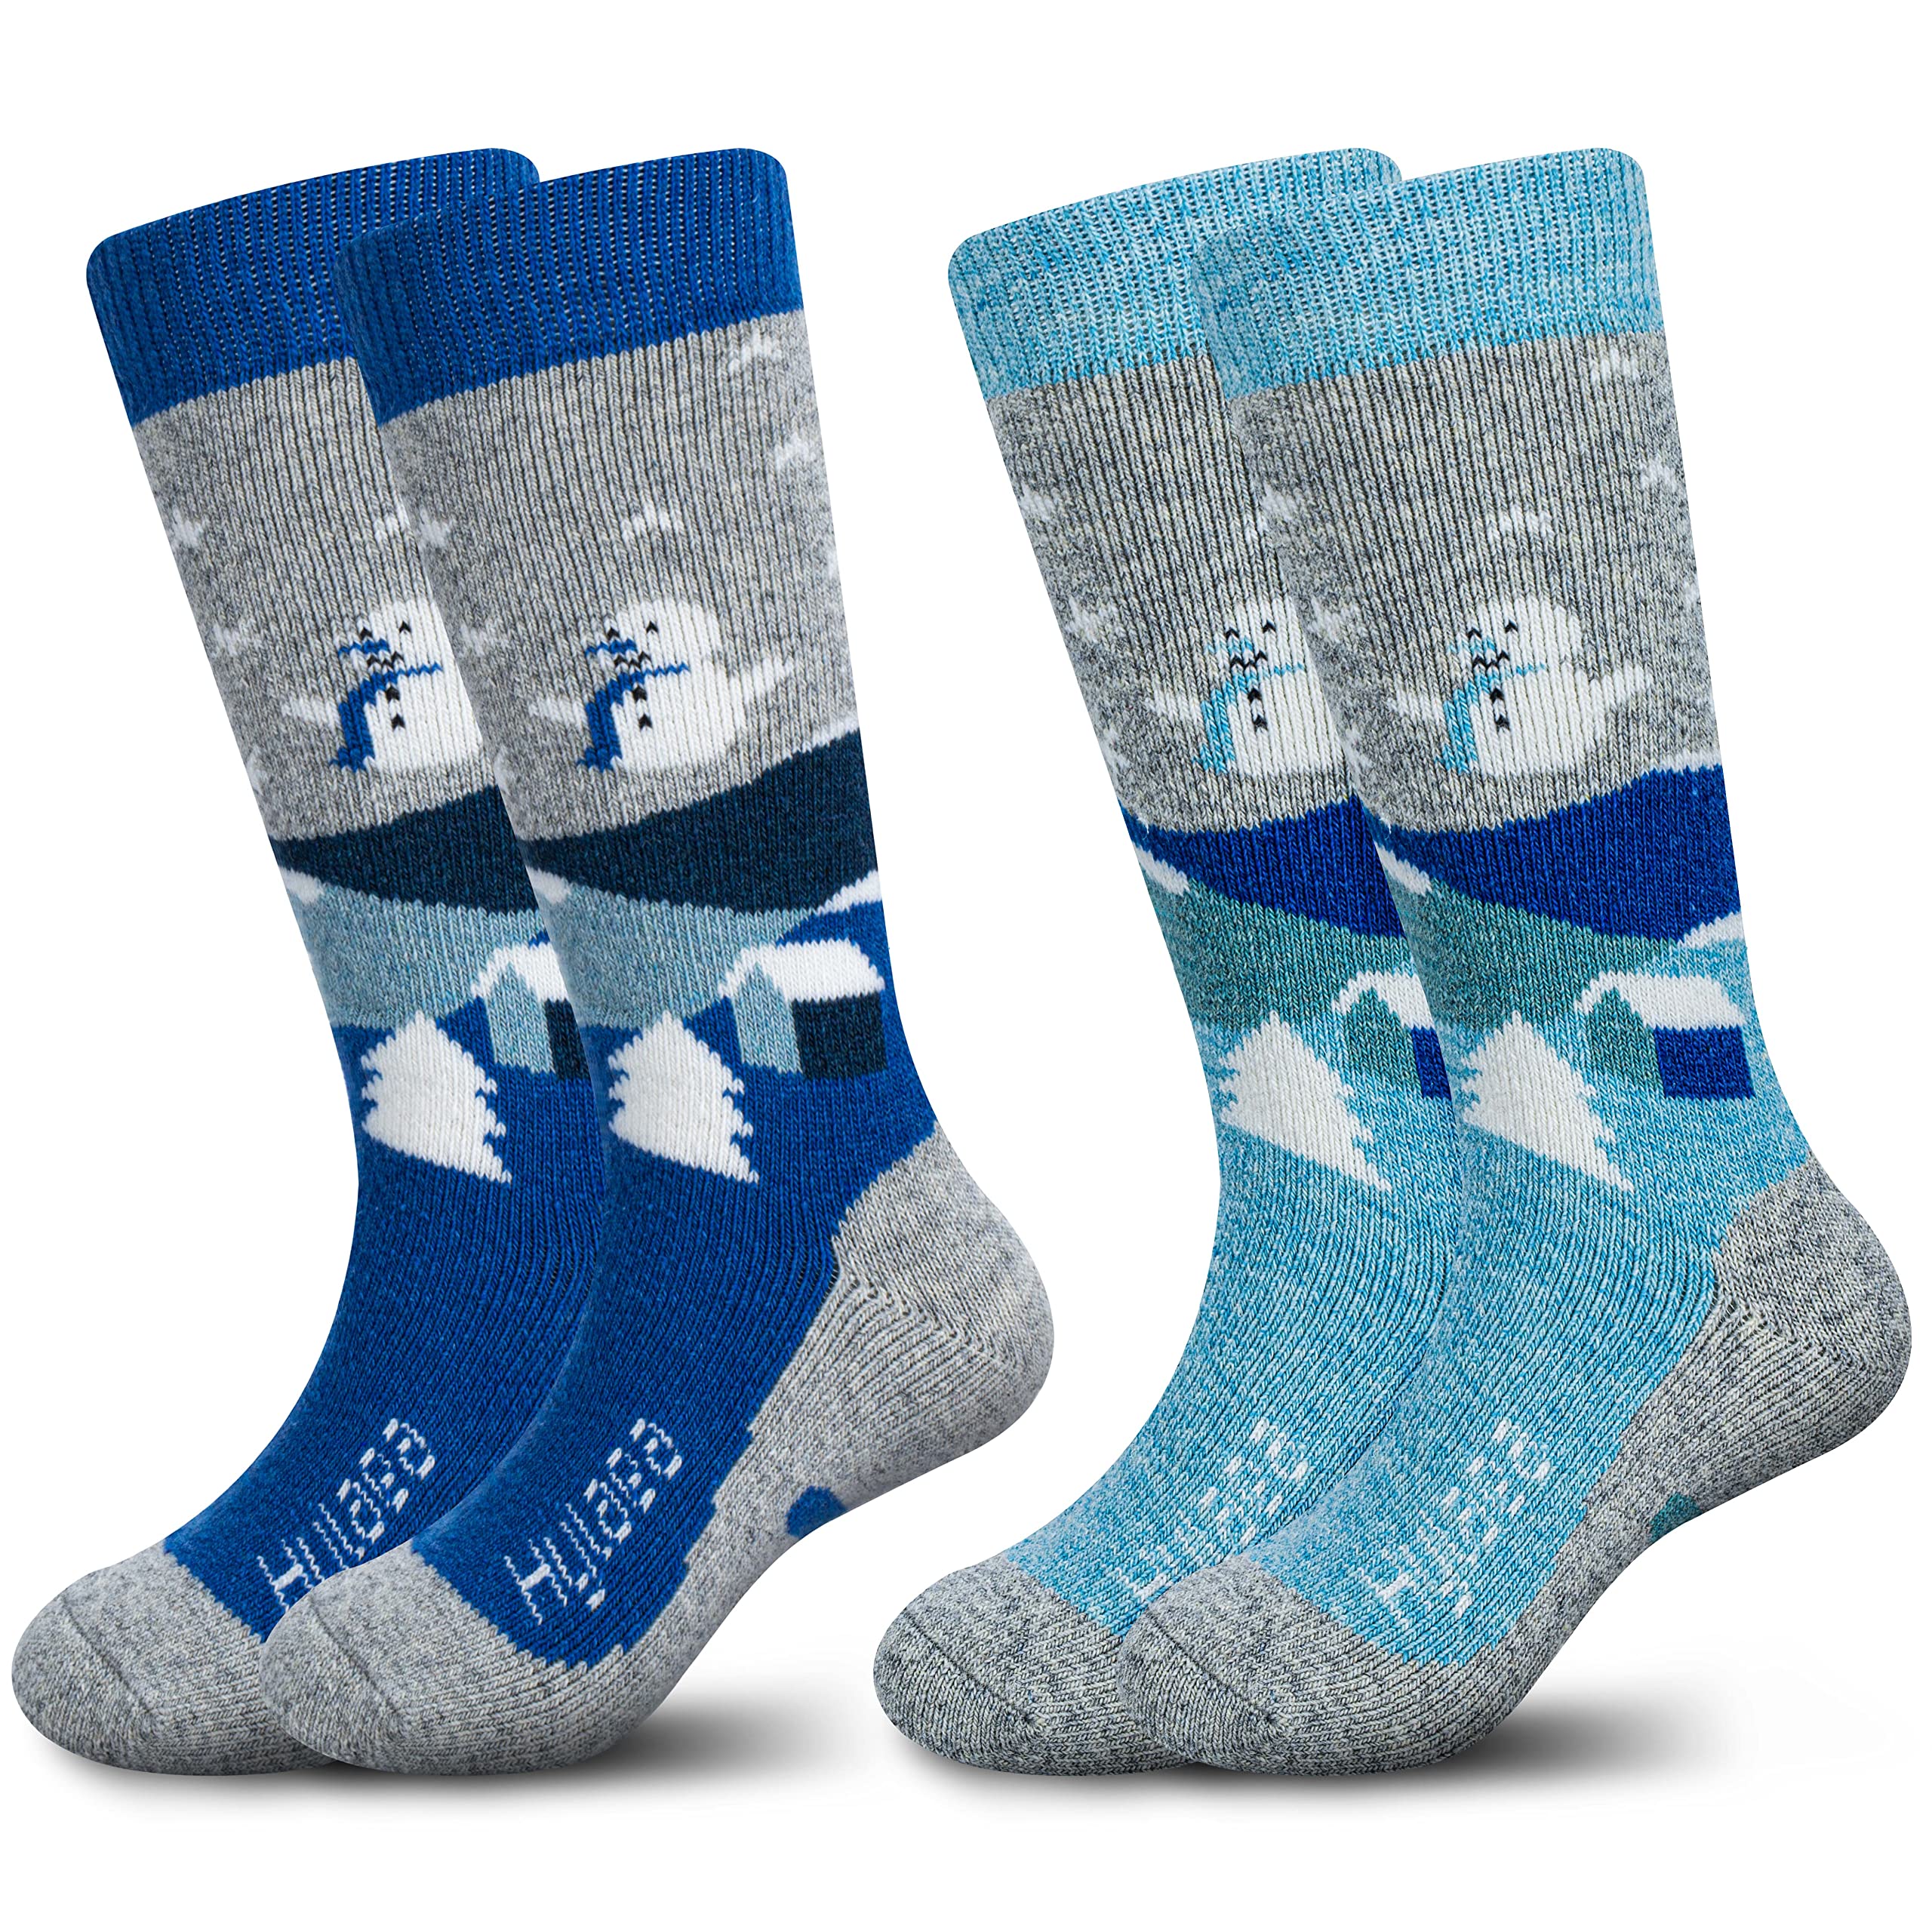 Wool Ski Socks, Knee-high Warm Socks For Snow, Winter, Hunting